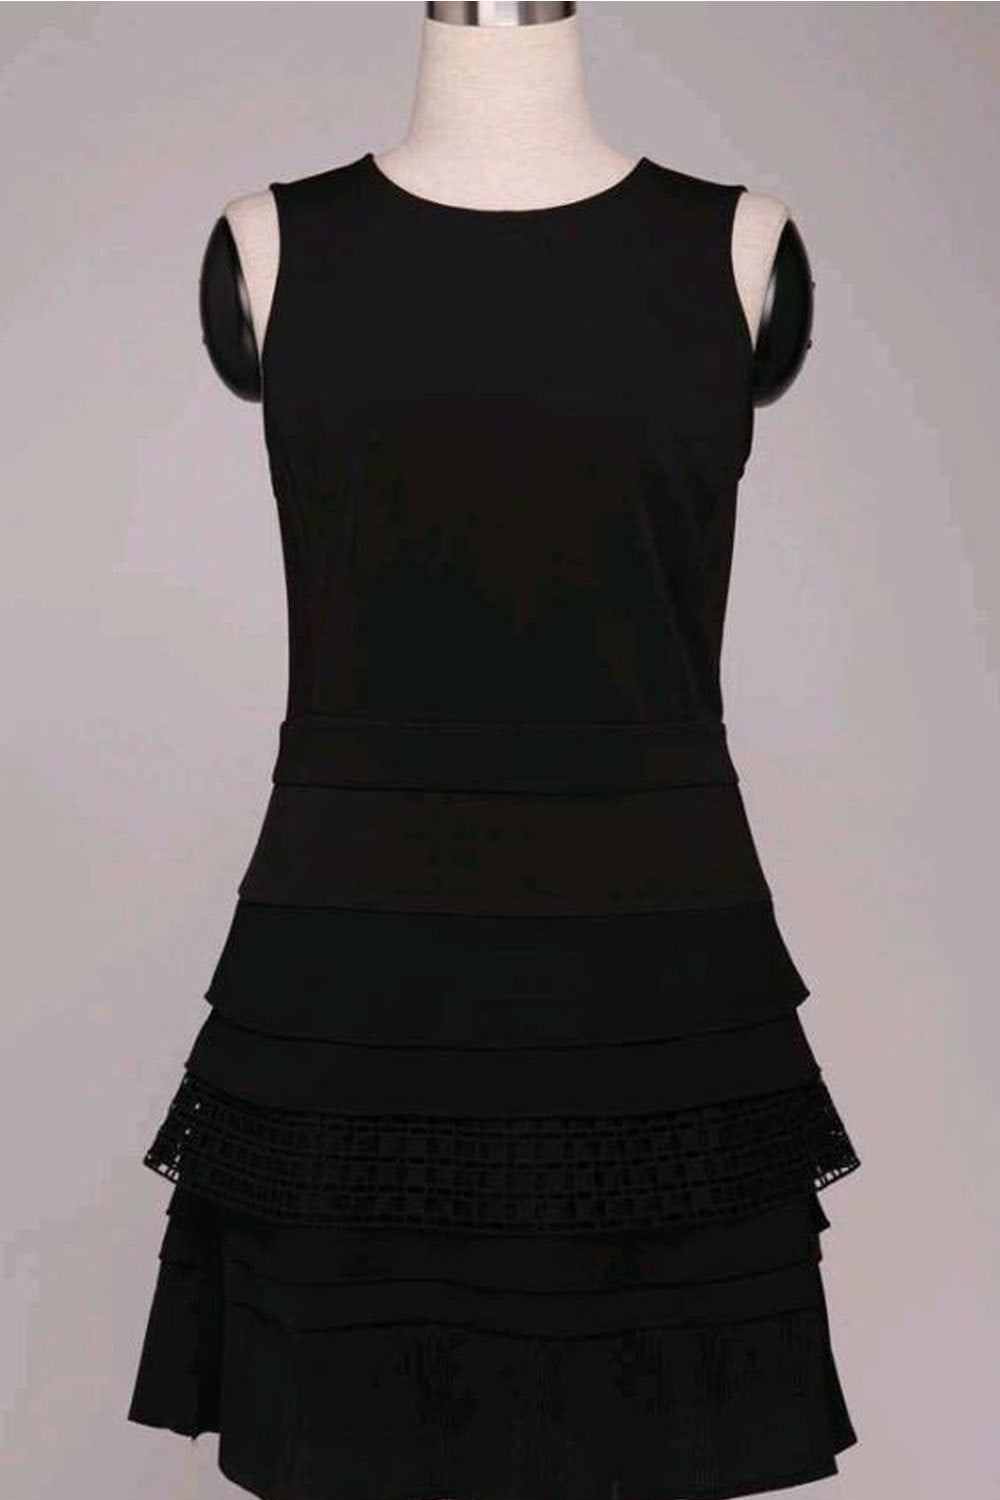 Ketty More Women's Latest Fashion High Neck Fish Tail Skirt Dress-KMWD239